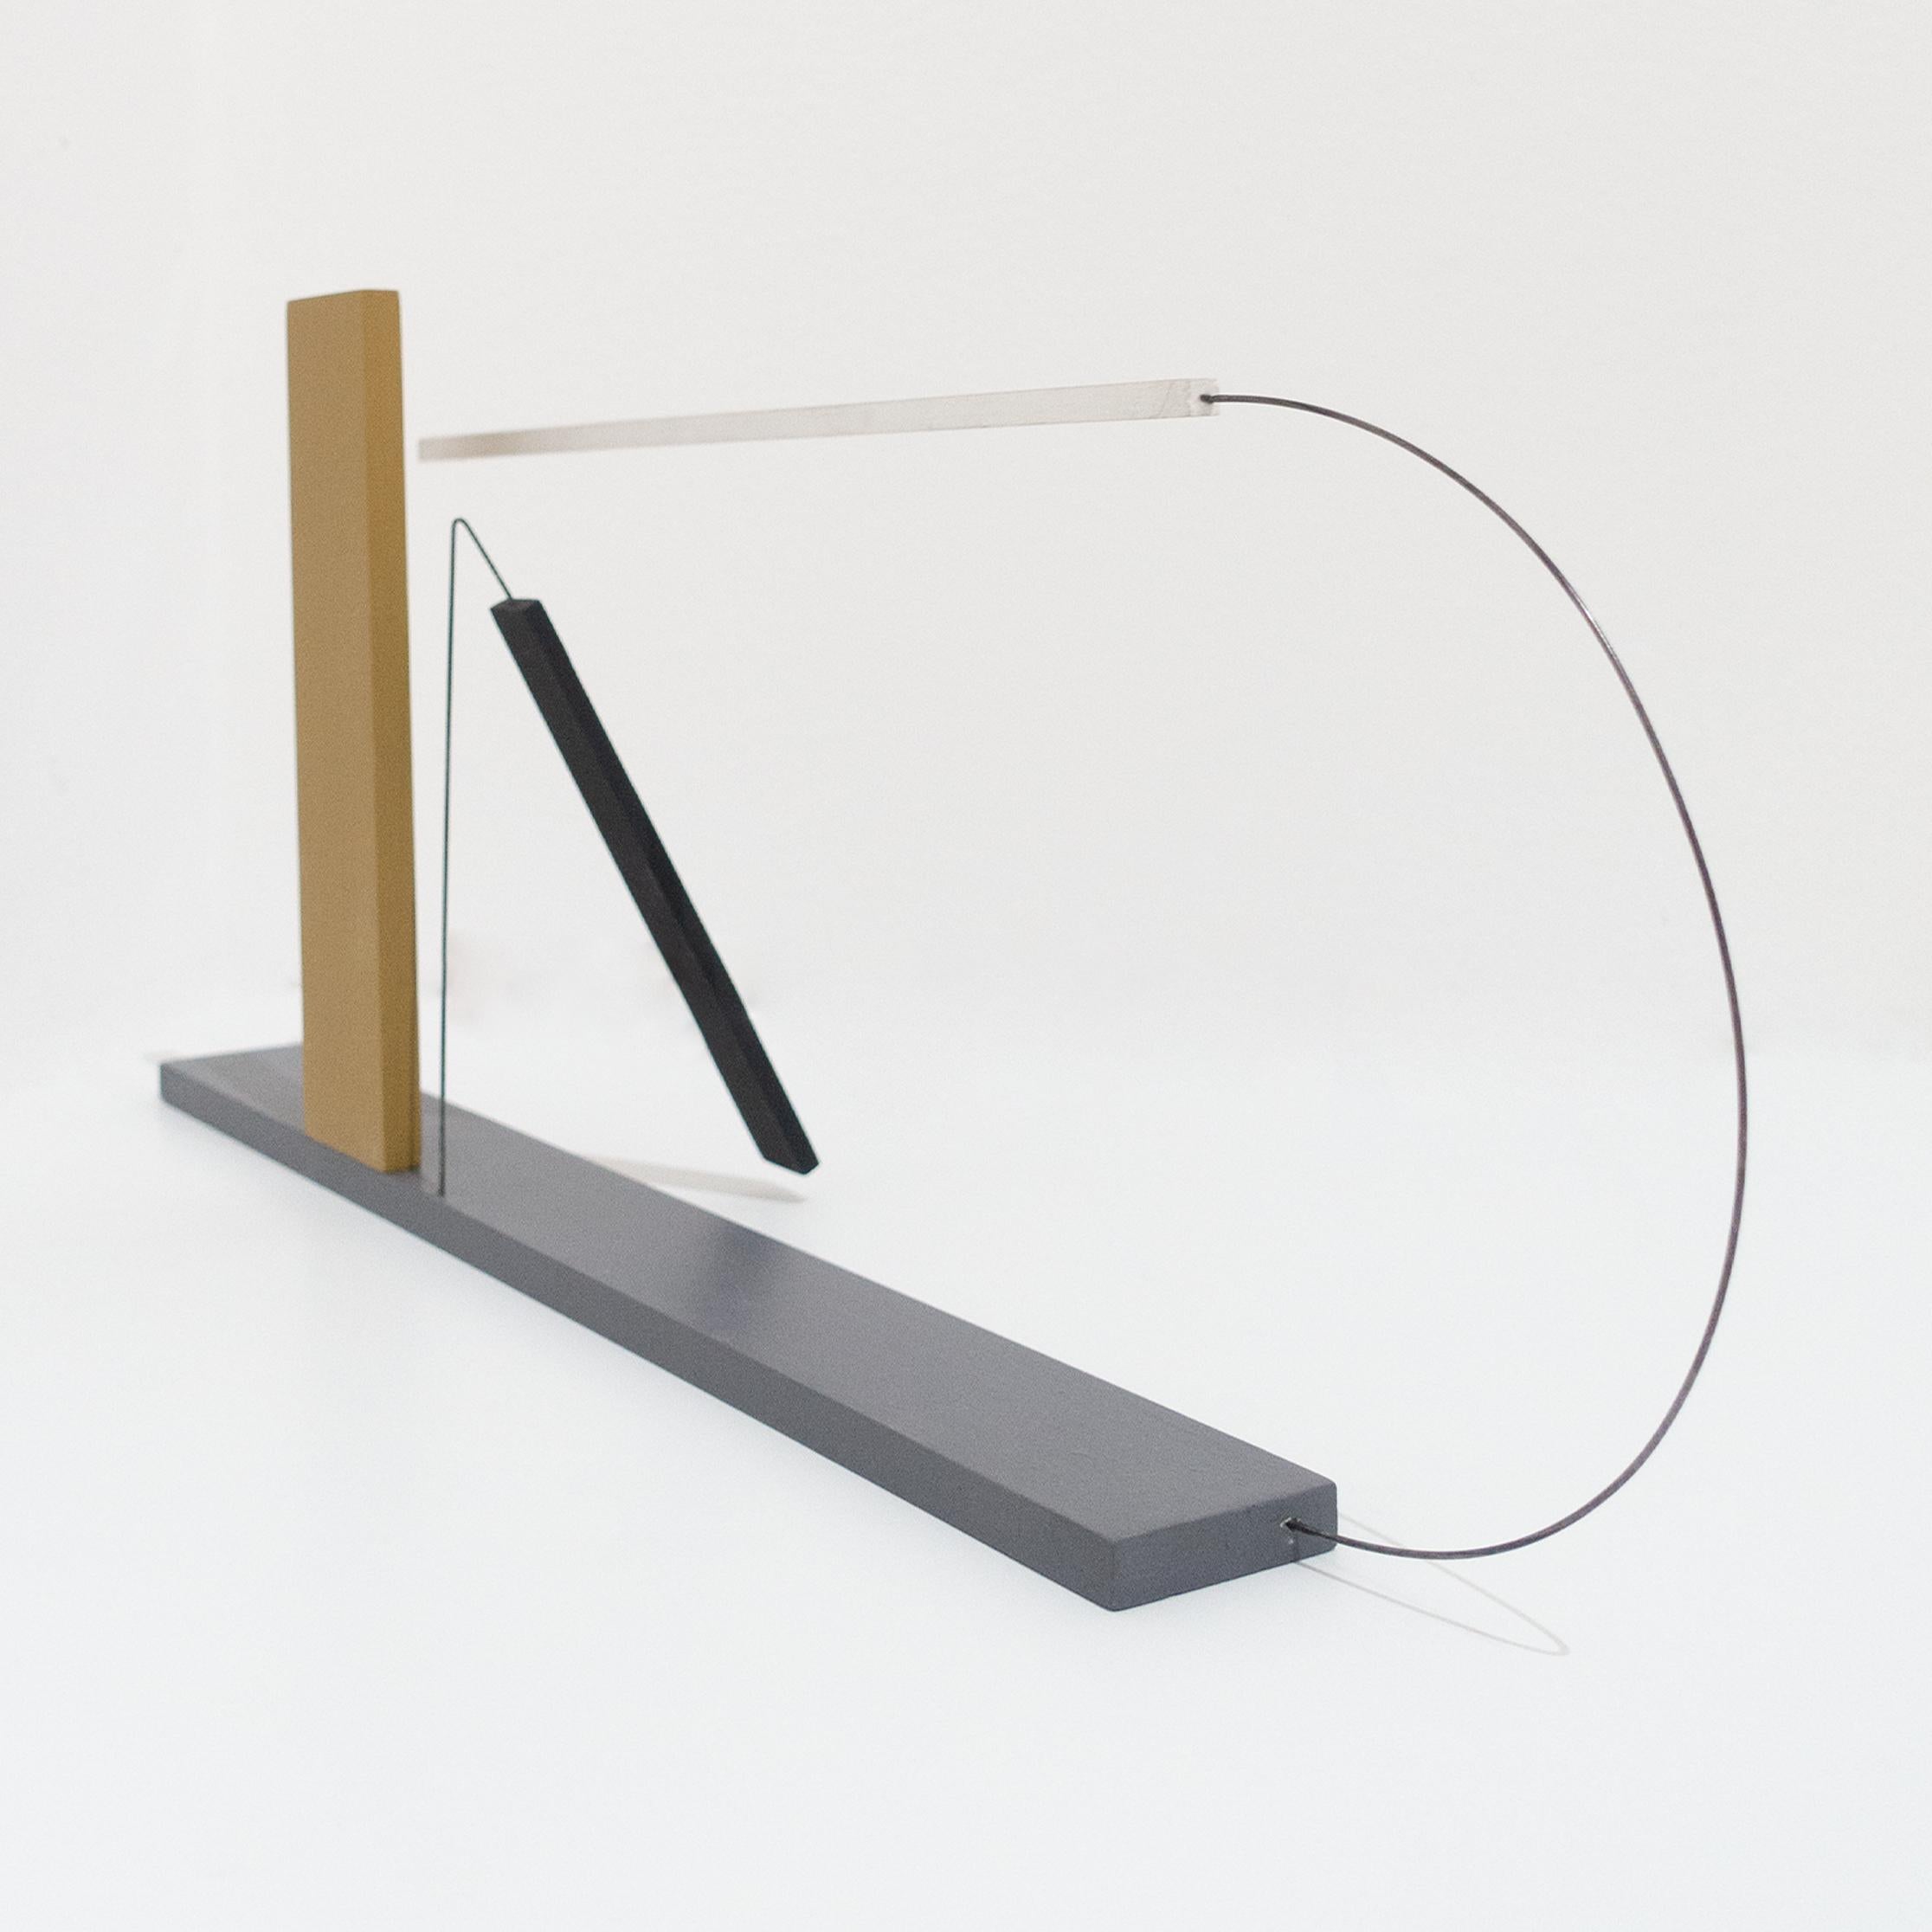 Bruno Munari Abstract Sculpture - Sensitiva, Kinetic Sculpture, Abstract Art, Wood, Pastel Colors